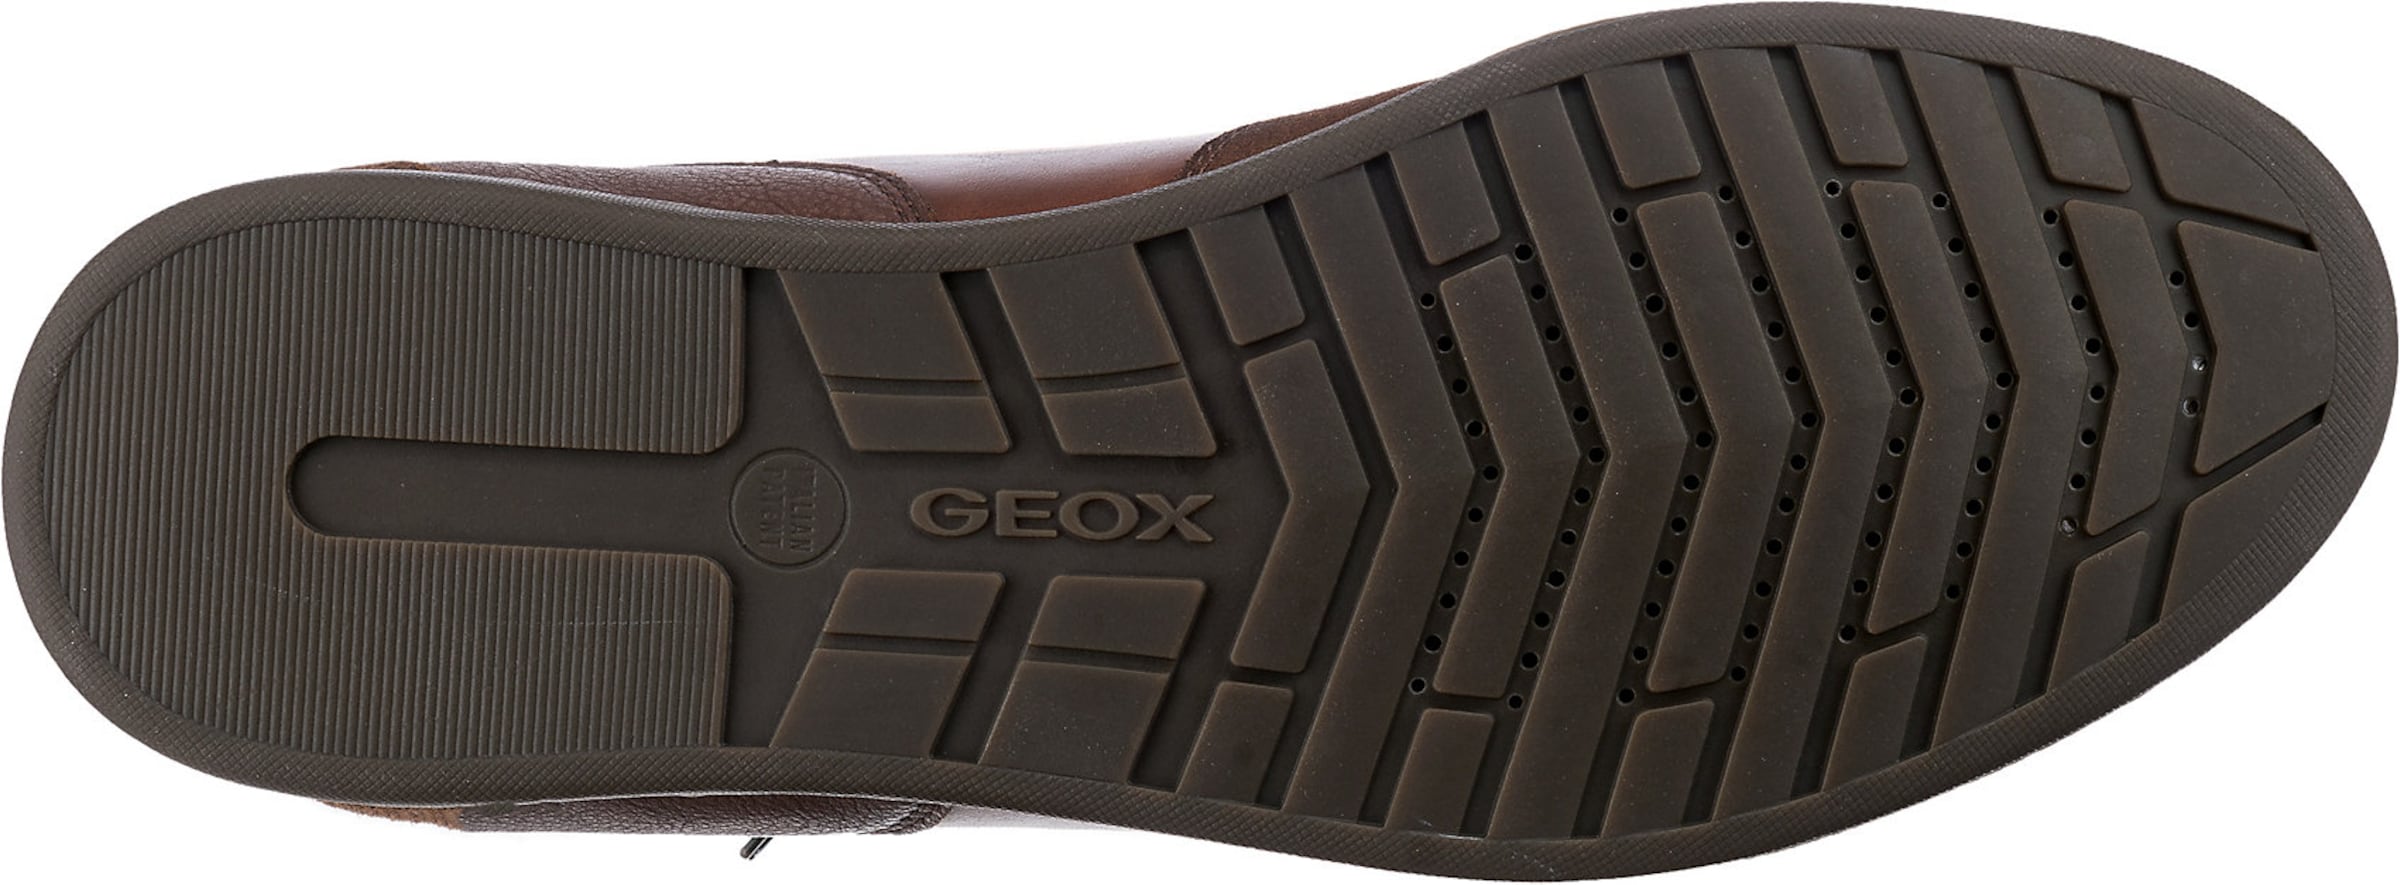 Männer Sneaker GEOX Sneaker 'Renan' in Braun, Cognac - SD88552